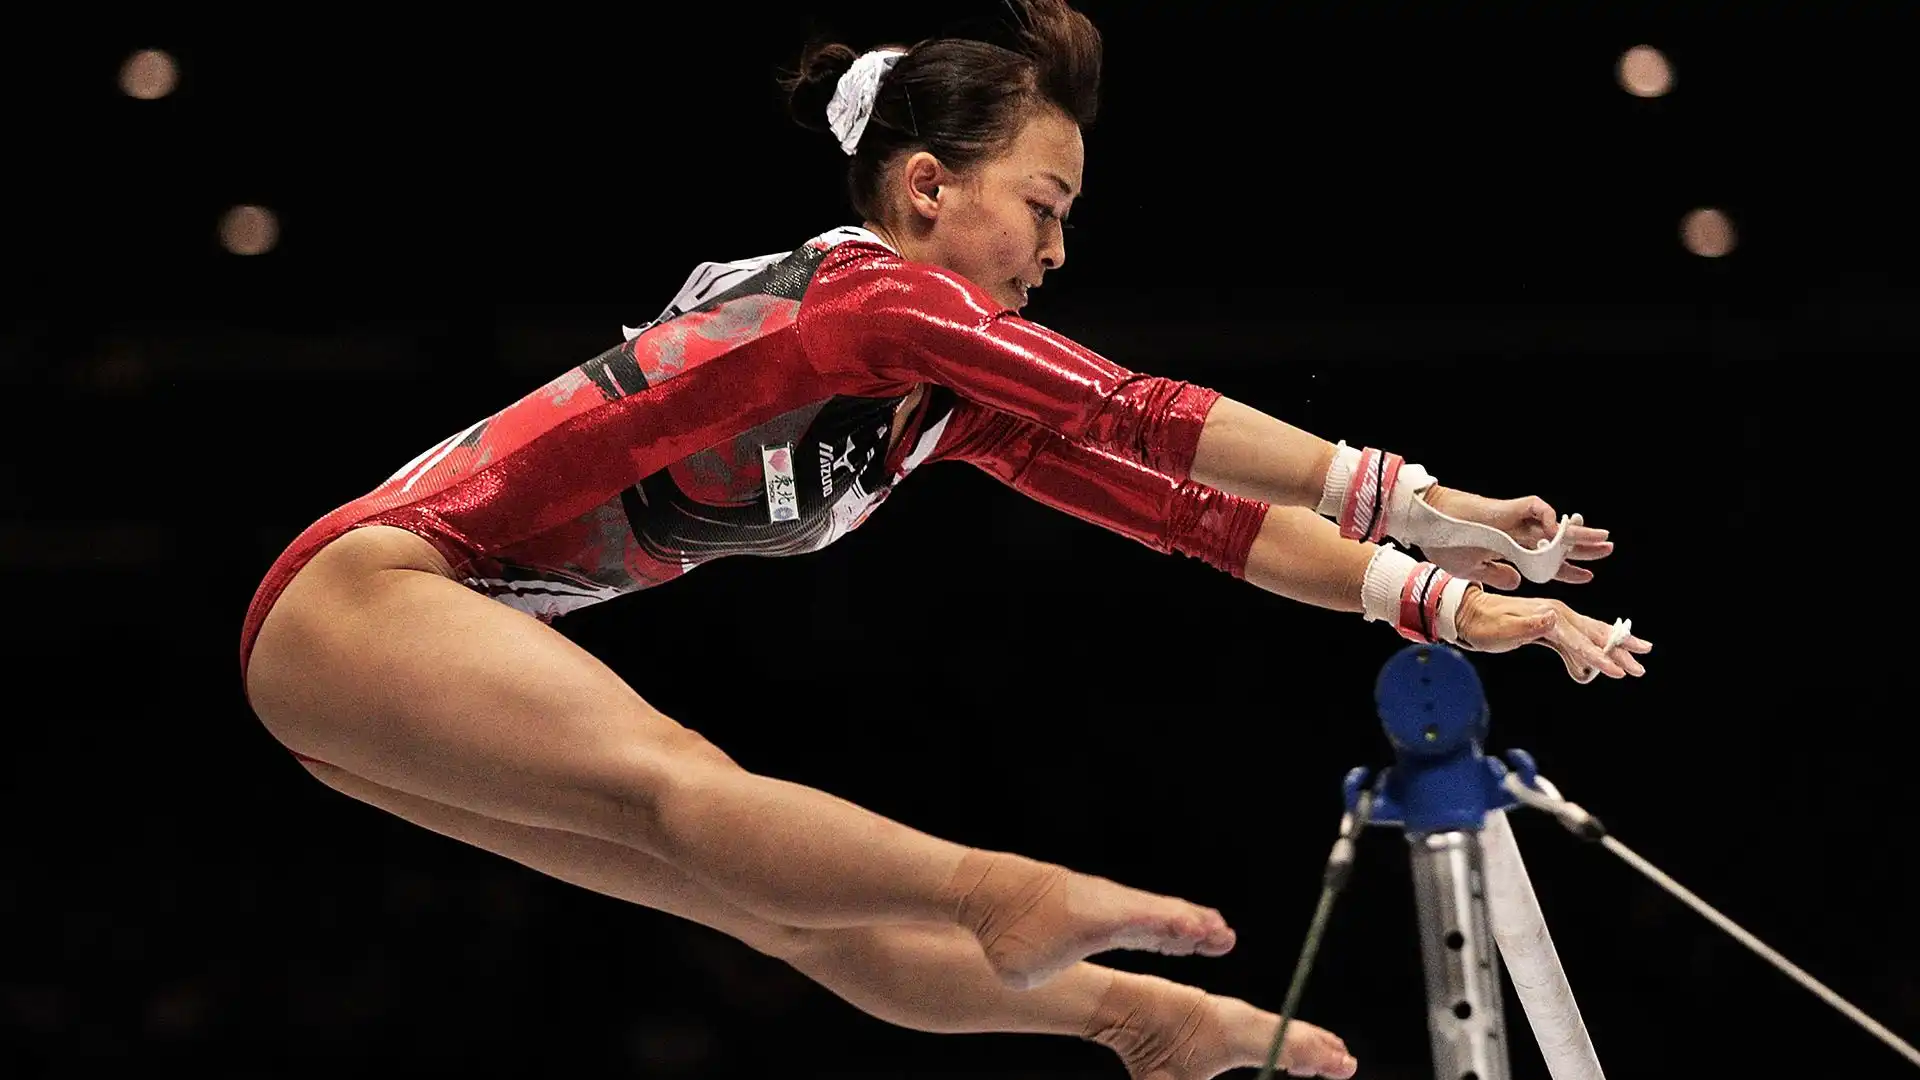 Ha partecipato alle Olimpiadi del 2012 insieme ai suoi fratelli, entrambi ginnasti: Kazuhito Tanaka e Yusuke Tanaka